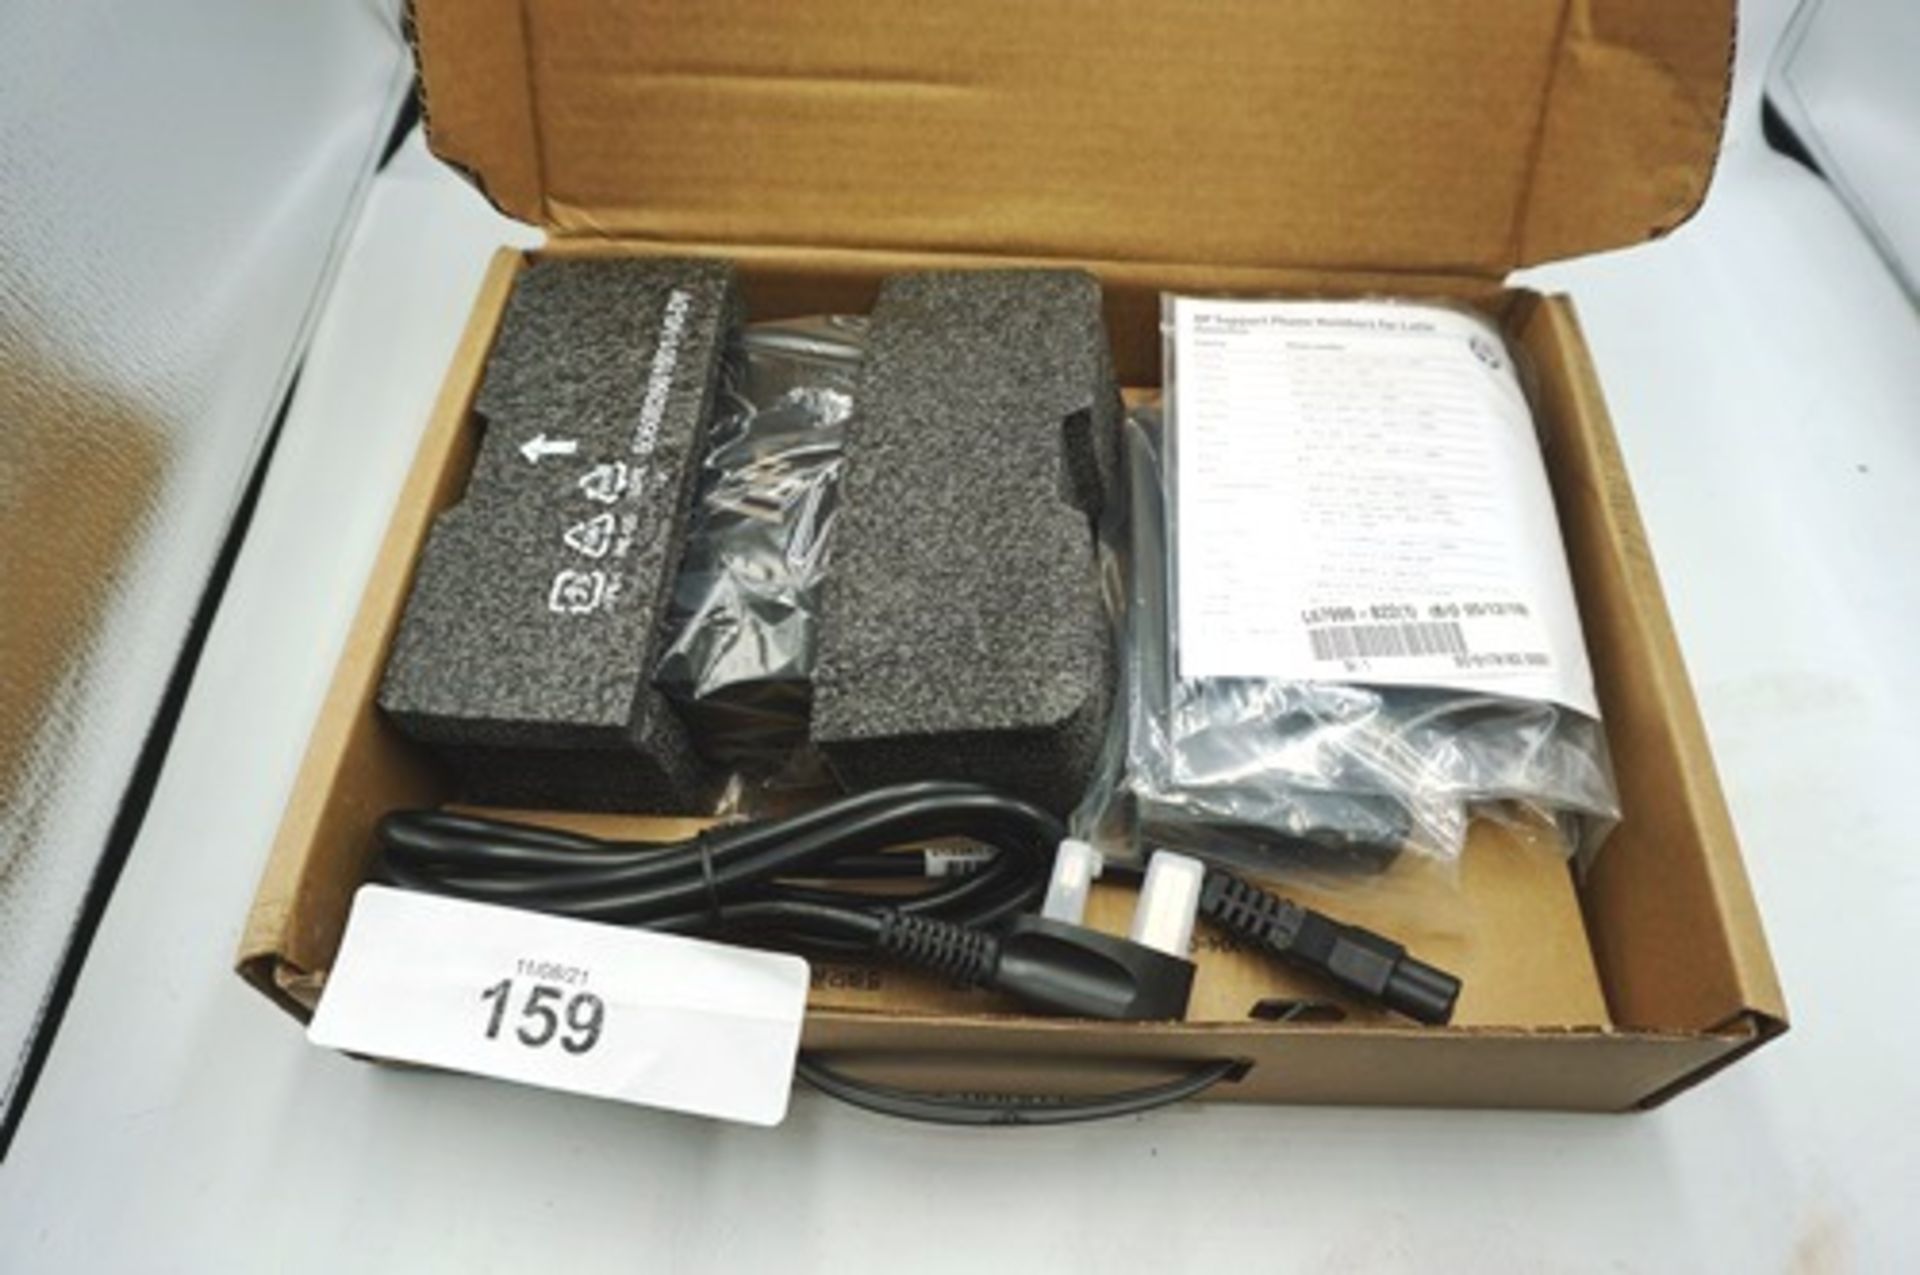 1 X HP USB-C laptop dock G5, model HSN-IX02 - new in box (C5)